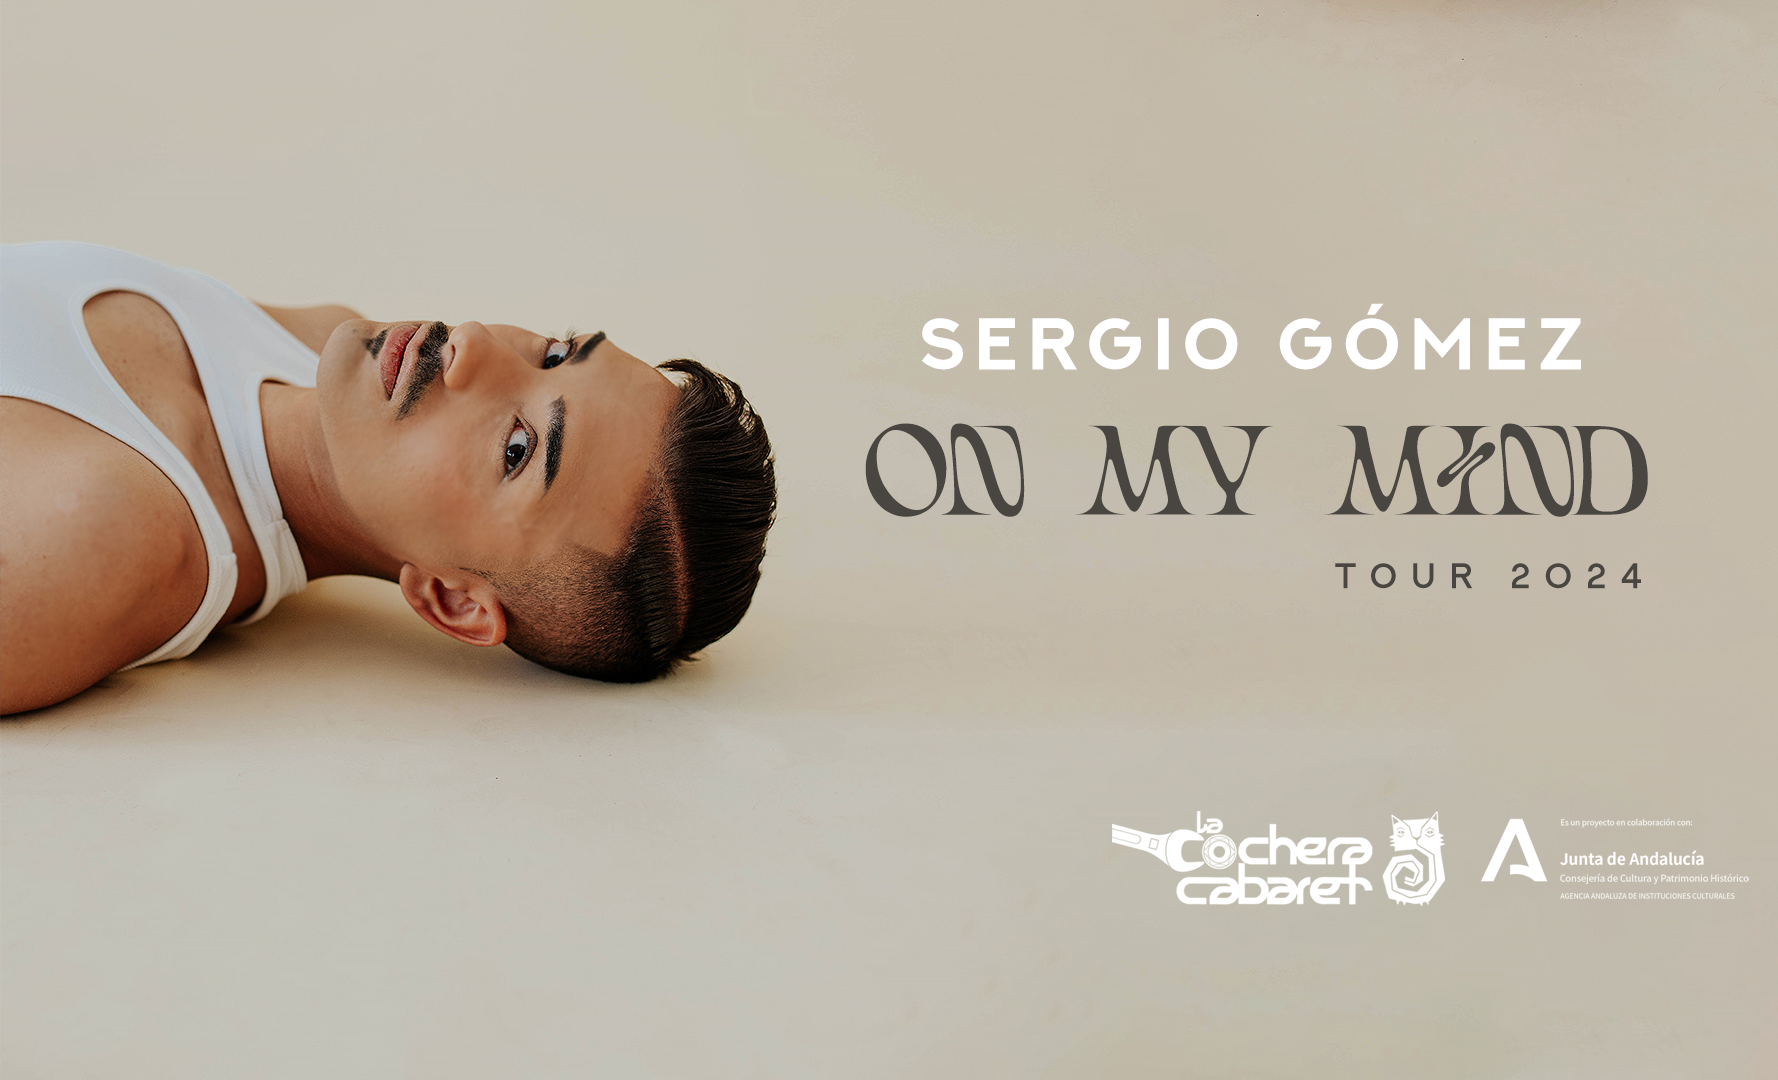 SERGIO GÓMEZ "ON MY MIND TOUR"